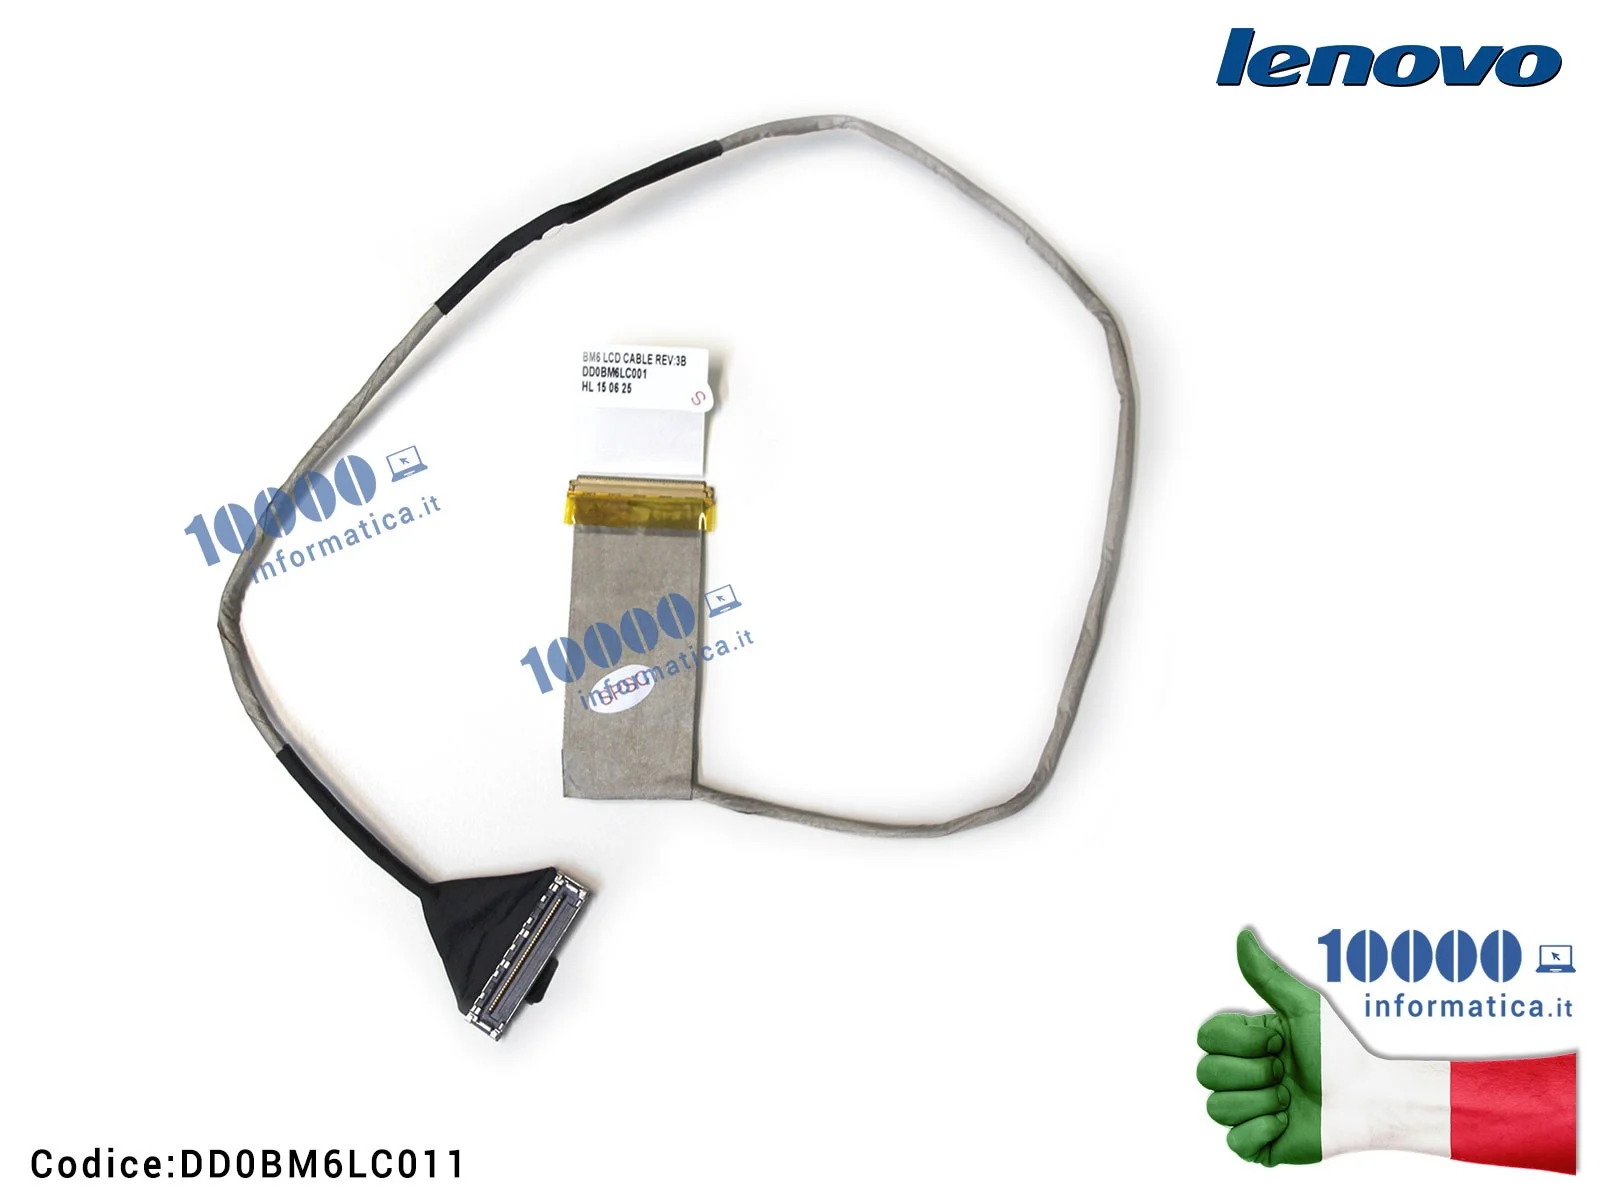 DD0BM6LC011 Cavo Flat LCD LENOVO Essential IdeaPad B5400 M5400 BM6 DD0BM6LC11 DD0BM6LC001 DD0BM6LC021